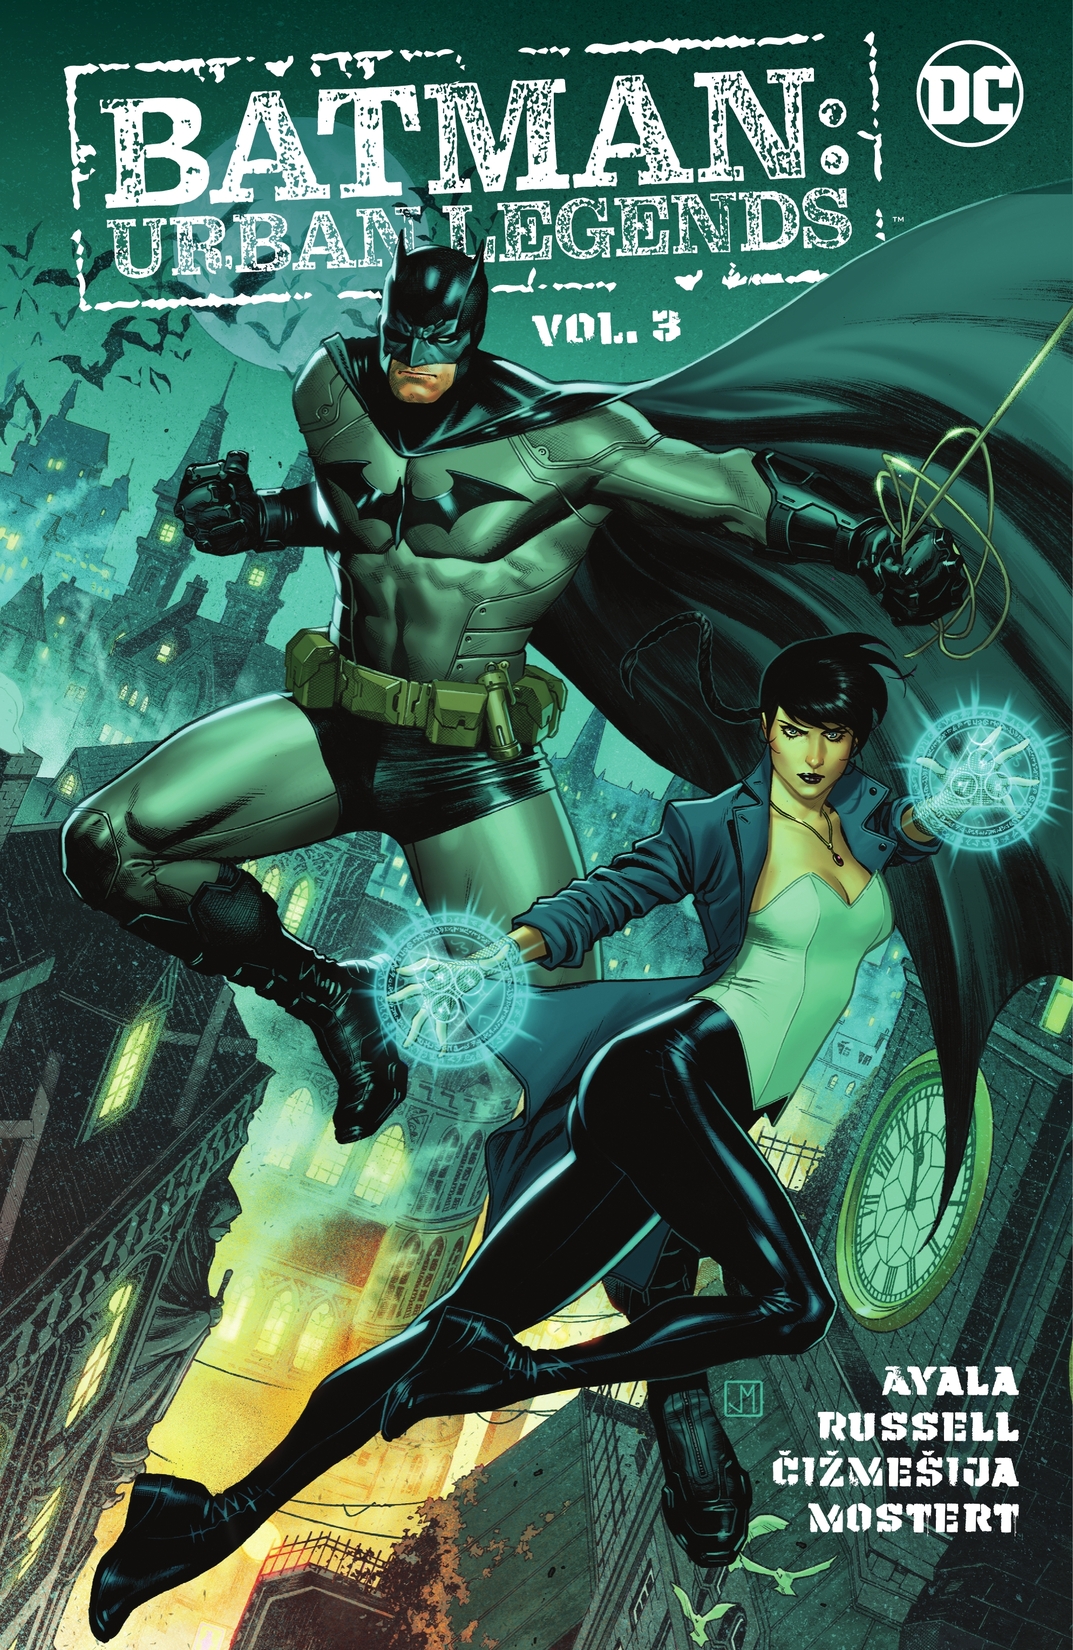 Batman: Urban Legends Vol. 3 preview images